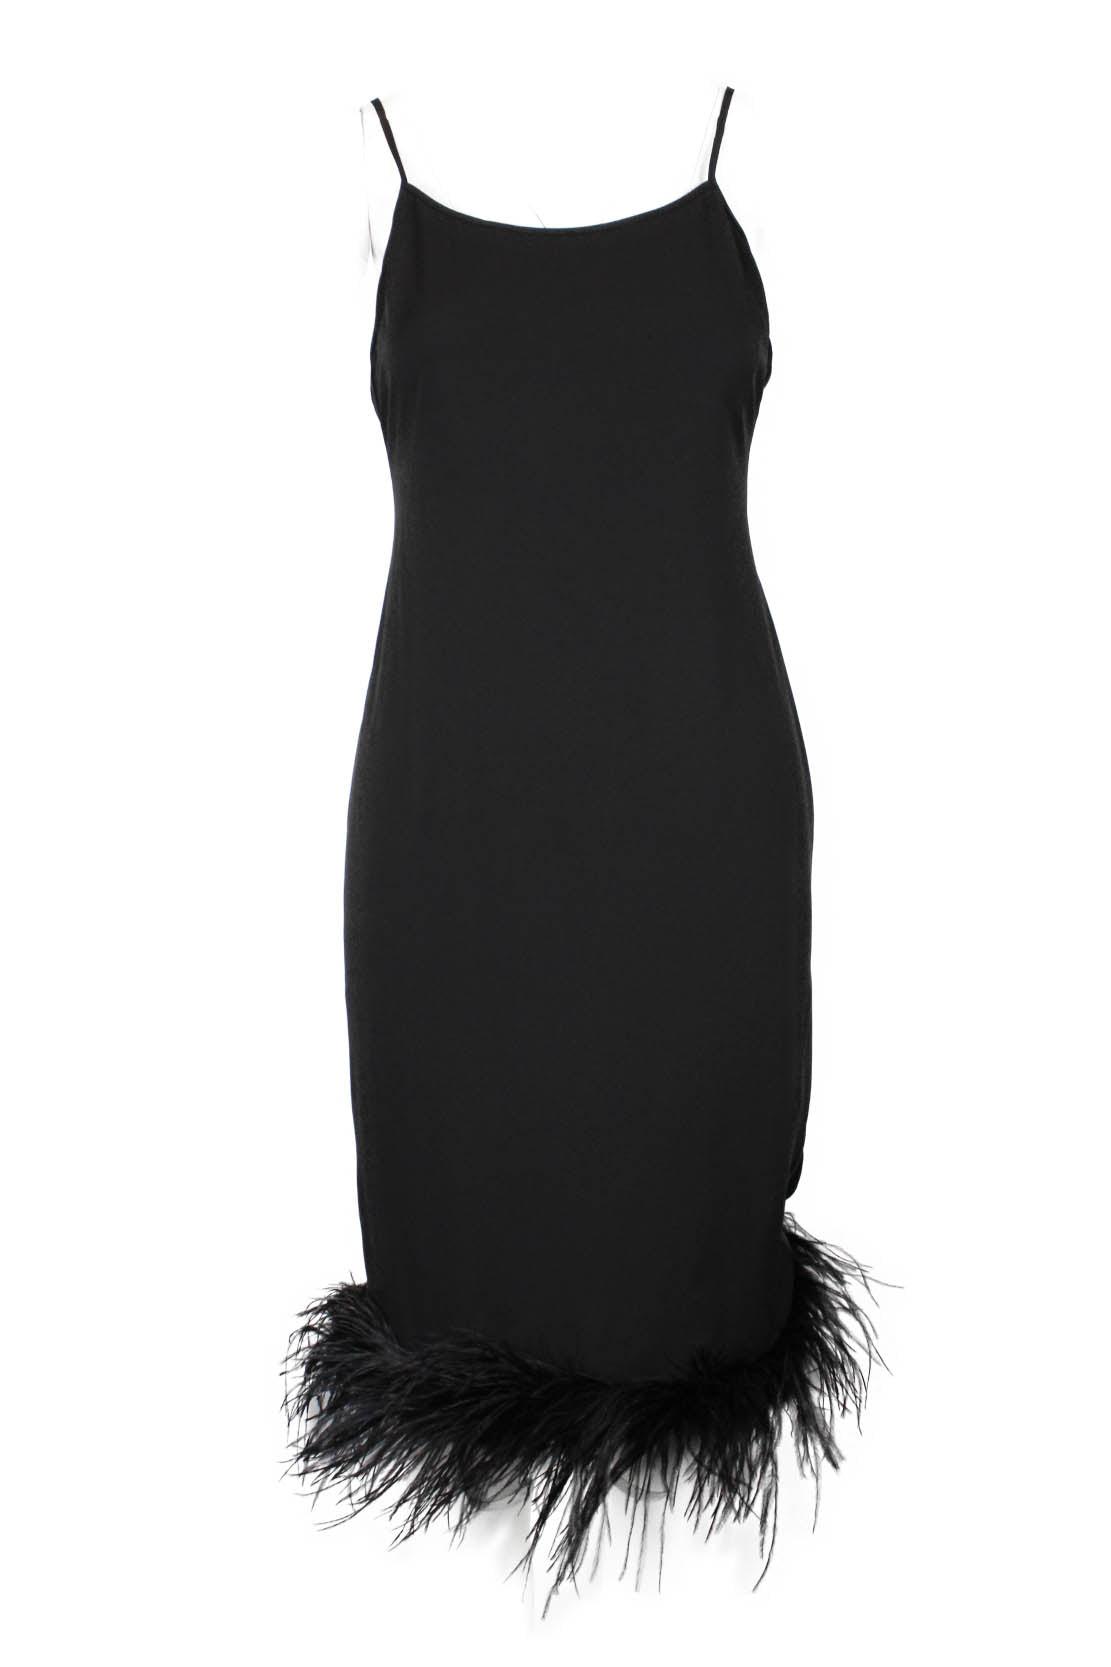 description: amanda uprichard black slip feather dress. features adjustable spaghetti straps, midi dress, zipper closure at center back, and ostrich feather trim.